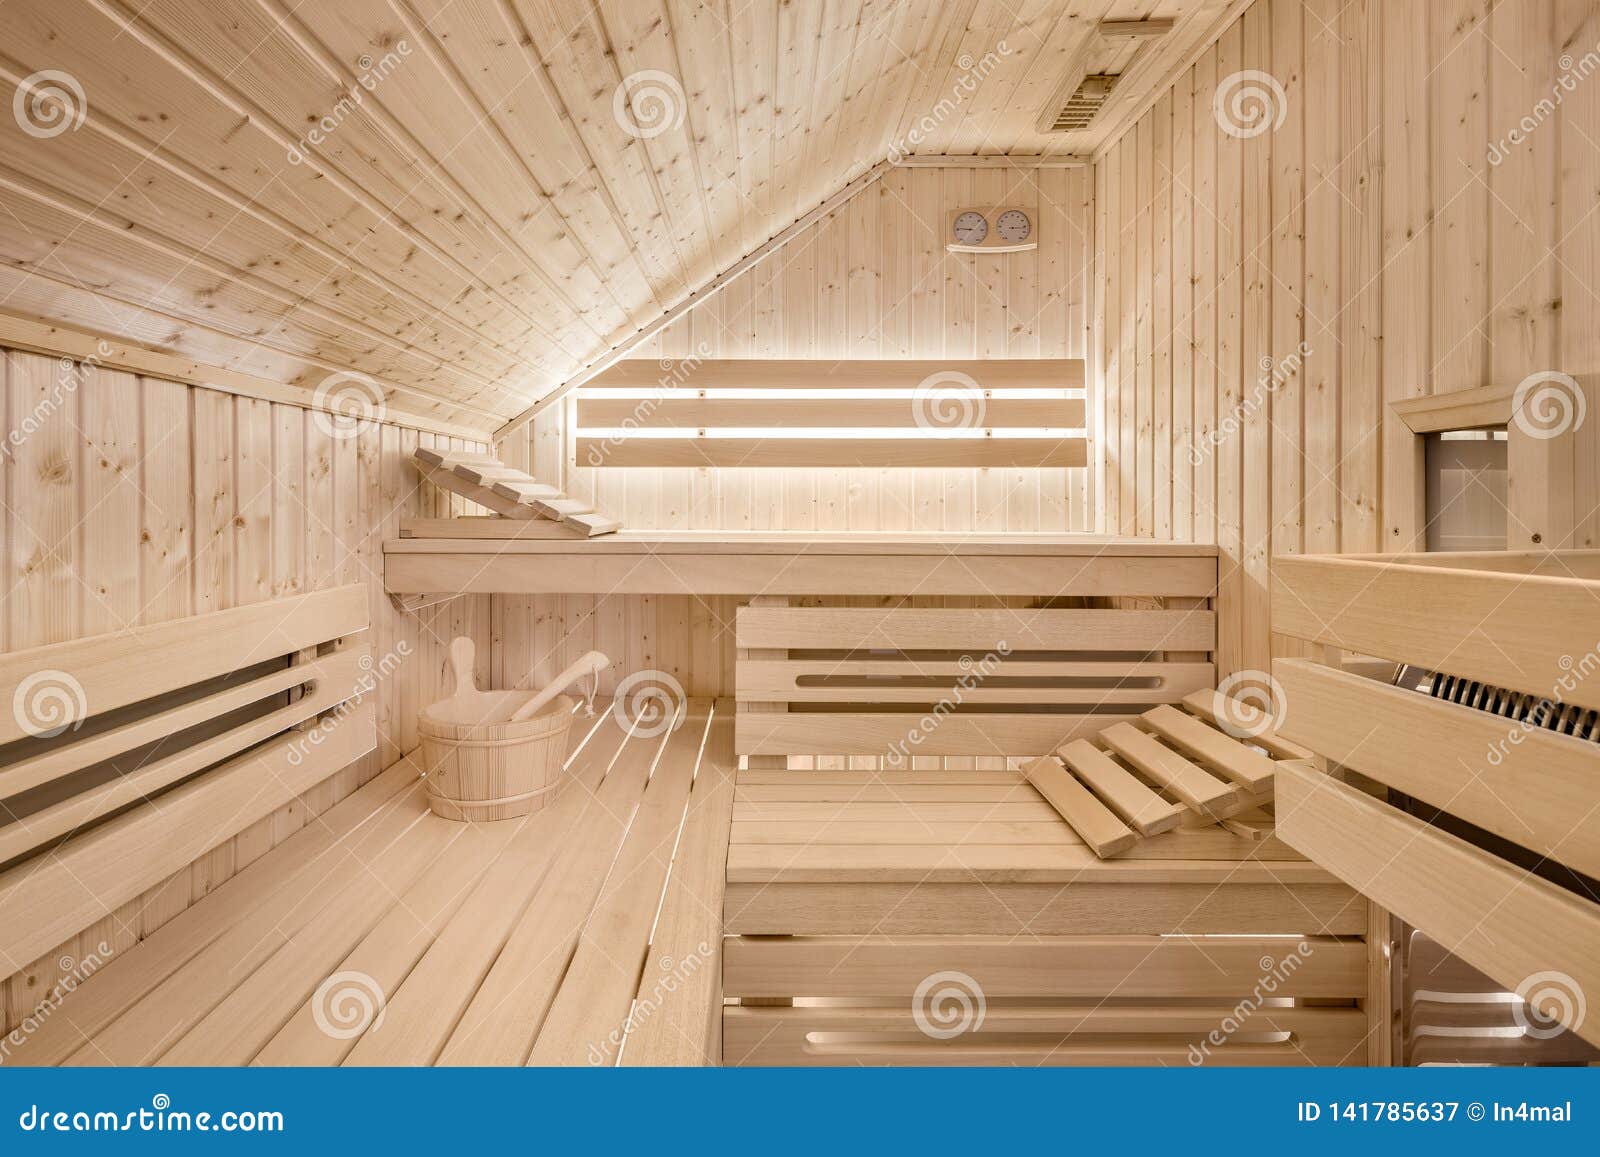 https://thumbs.dreamstime.com/z/sauna-finlandesa-en-el-%C3%A1tico-lujosa-de-madera-una-casa-moderna-141785637.jpg